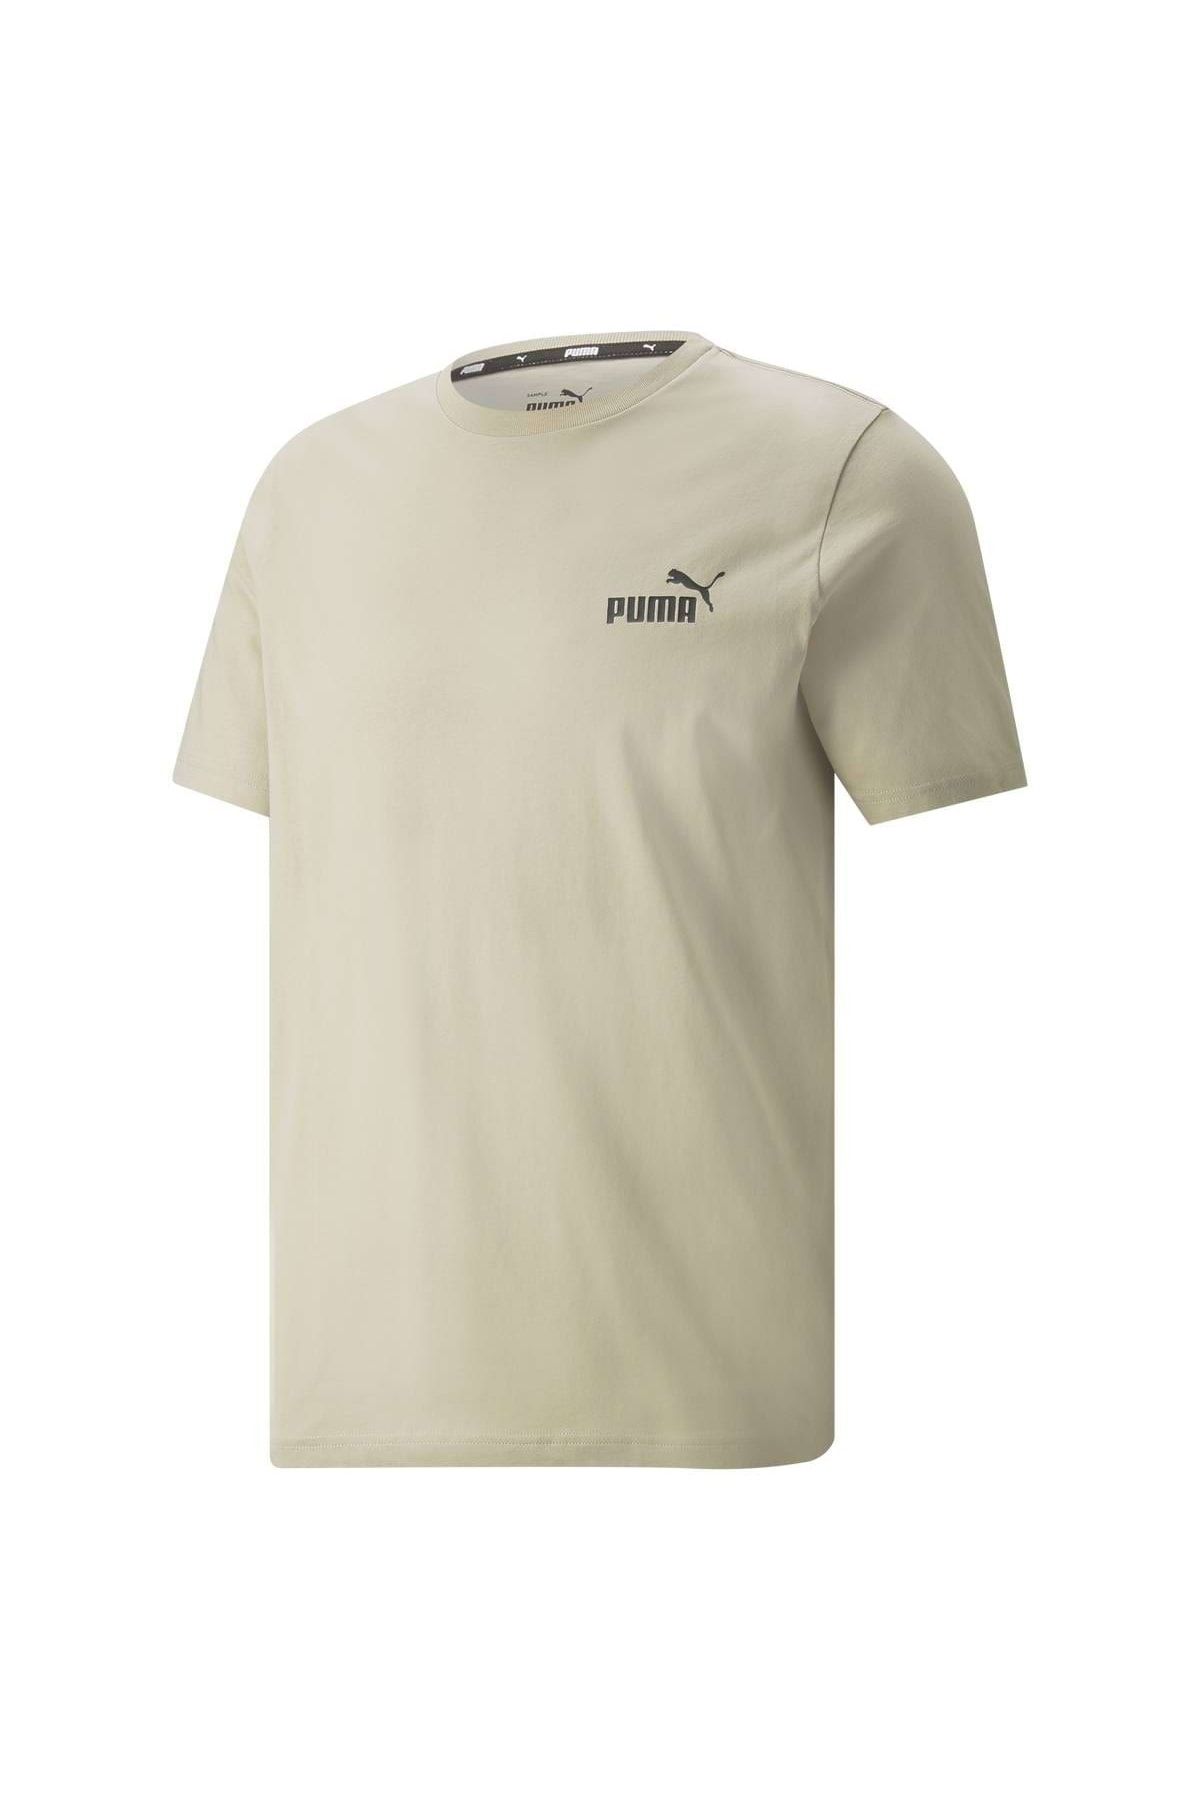 - Puma - Beige Trendyol Regular - fit T-Shirt